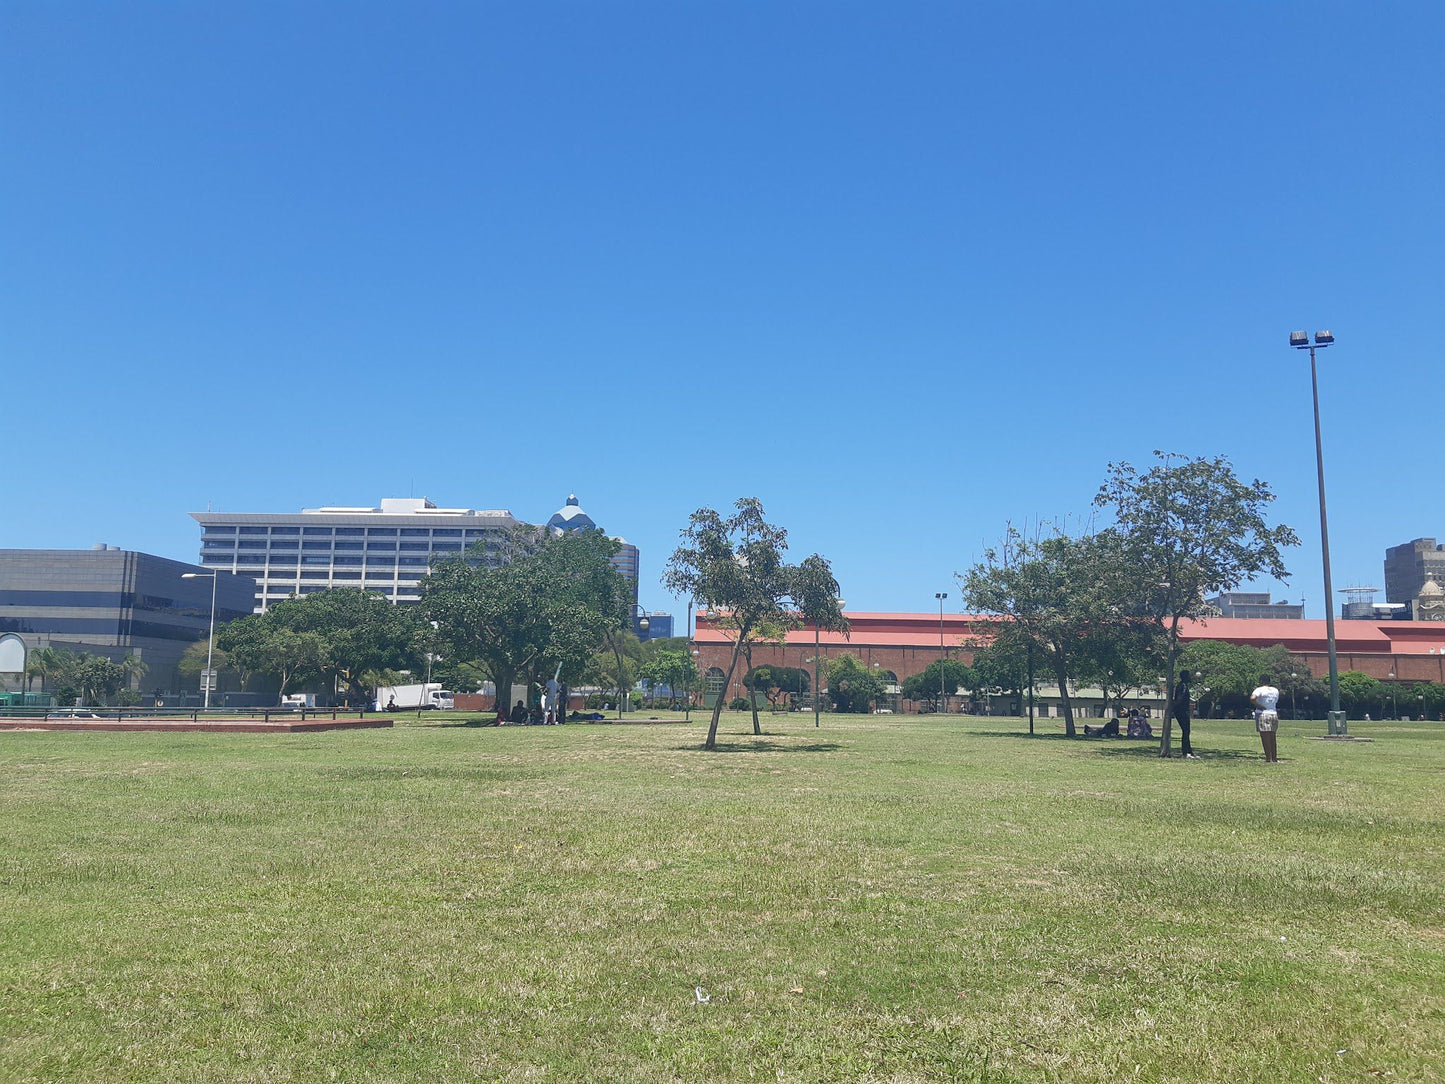  Gugu Dlamini Park